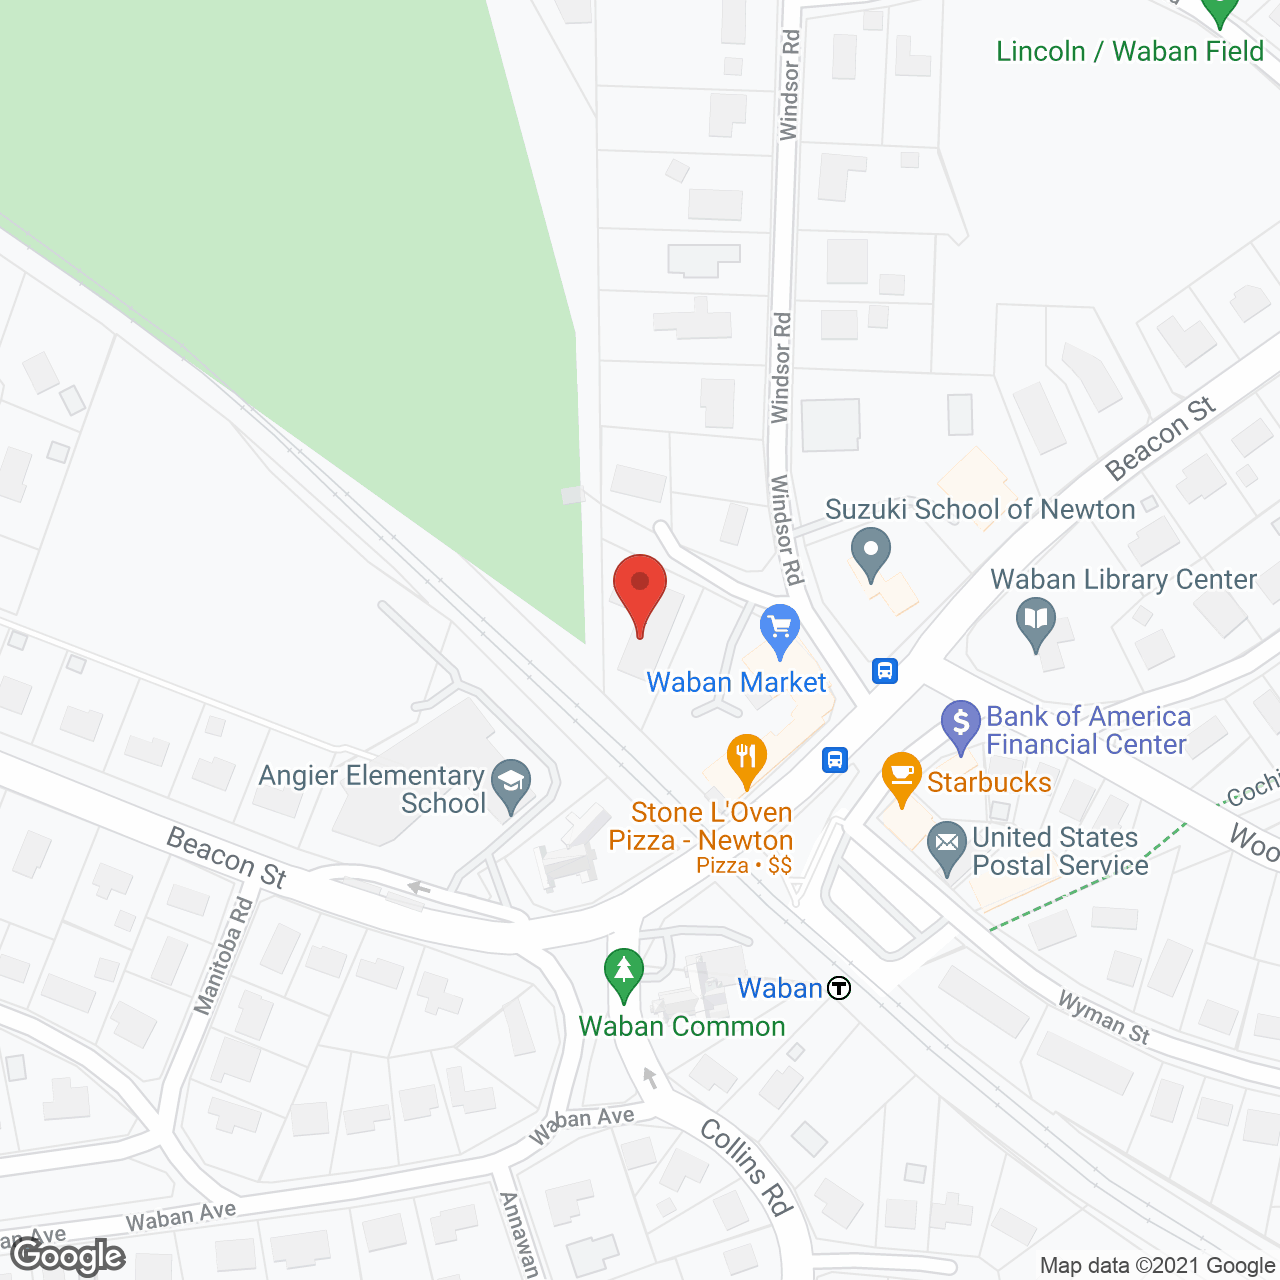 Waban Health Center in google map